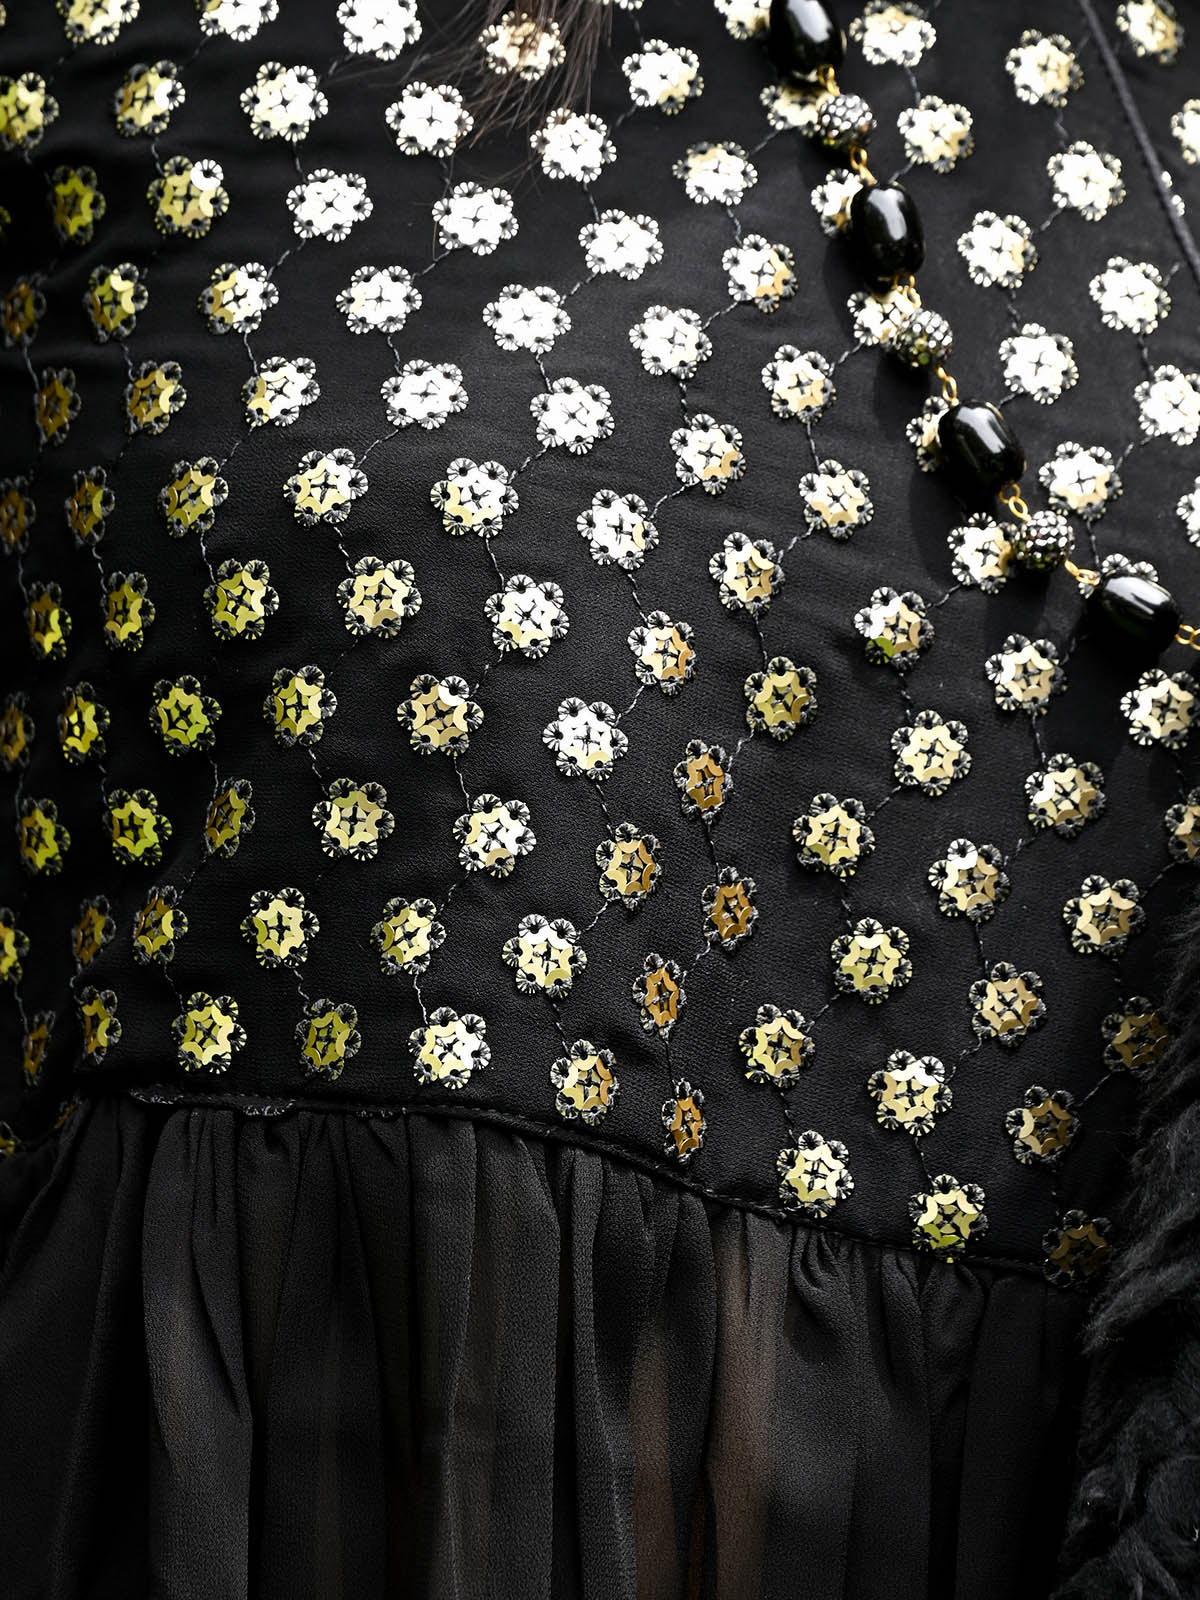 Odette Women Black Georgette Indo-Western Stitched Dress